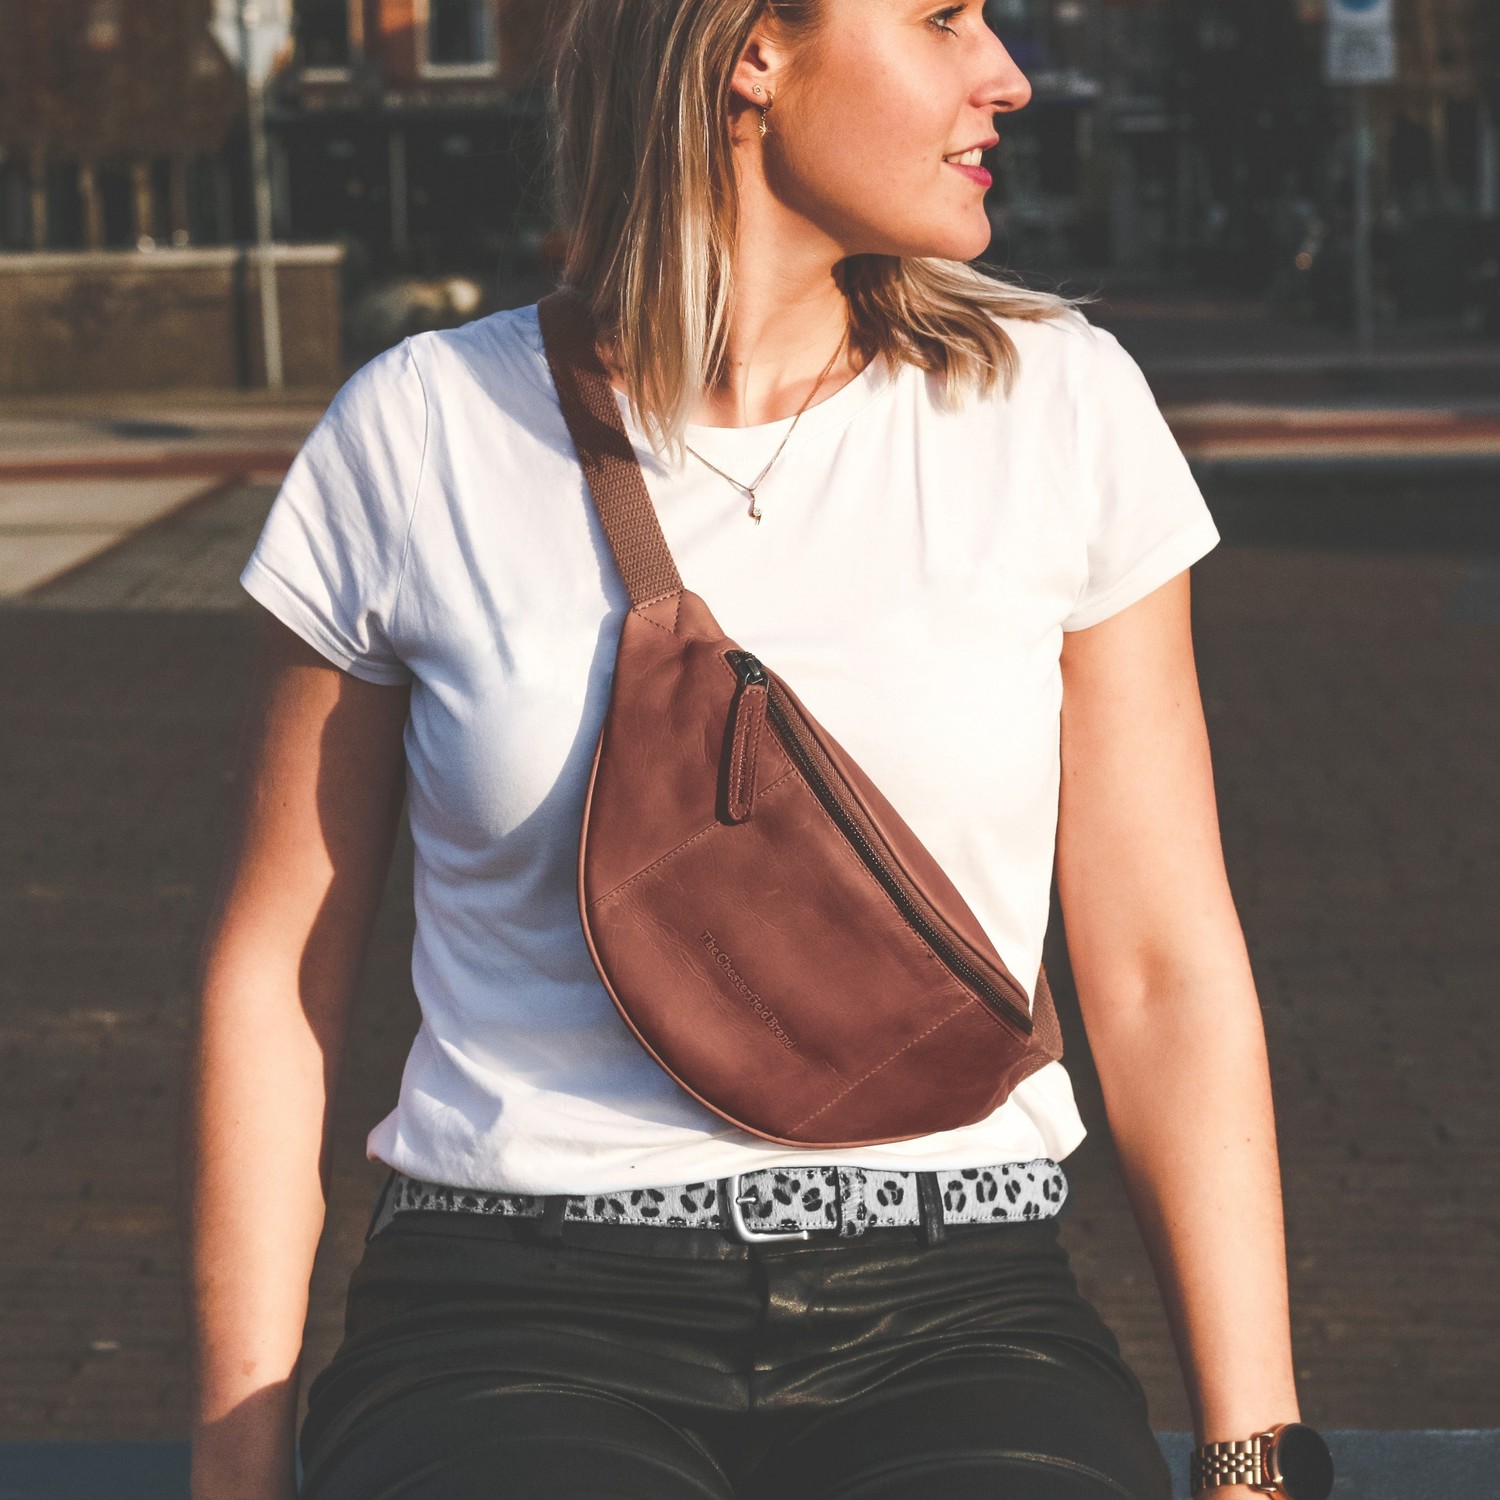 Quest – Leather Waist Bag Fanny Pack Bum Bag for Men and Women, Brown | Leather  waist bag, Waist bag, Man bag